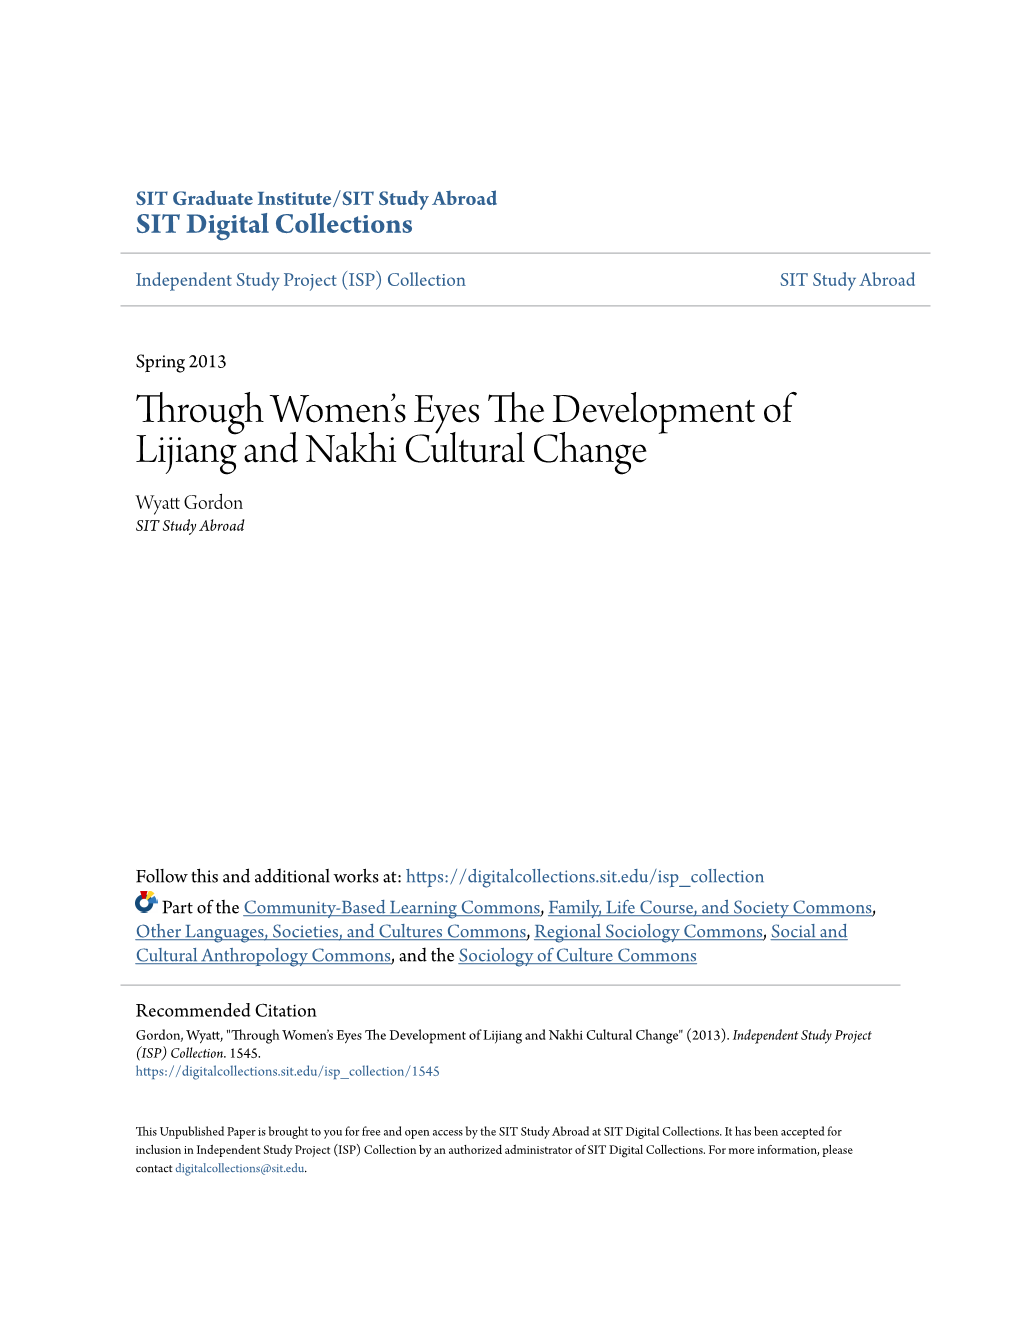 Through Women's Eyes the Development of Lijiang and Nakhi